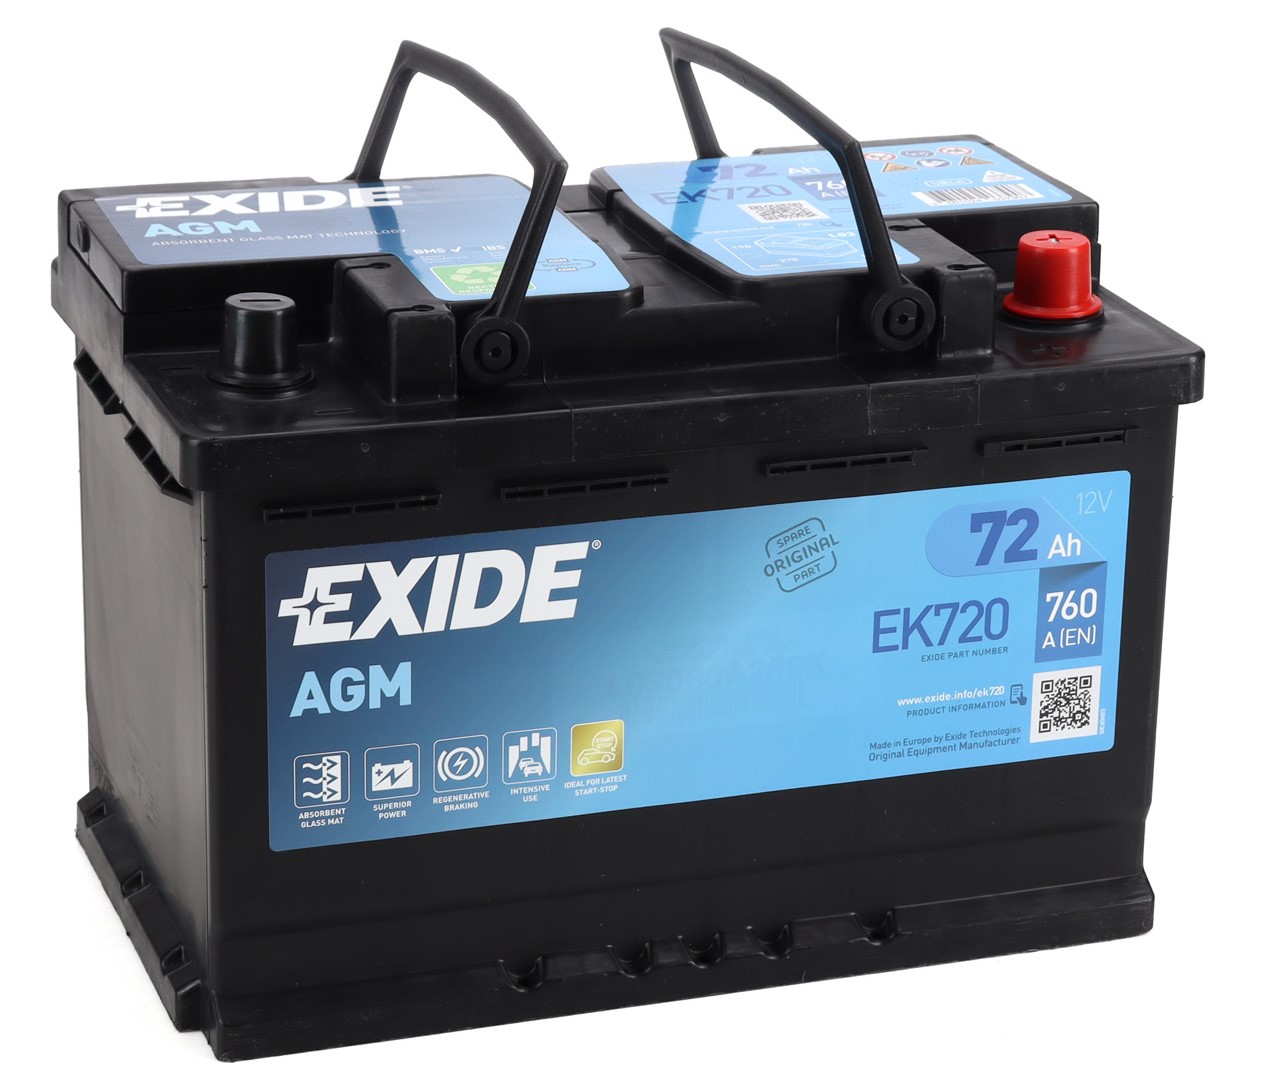 Akumulators EXIDE START-STOP AGM EK720 12V 72Ah 760A(EN) 278x175x190 0/1